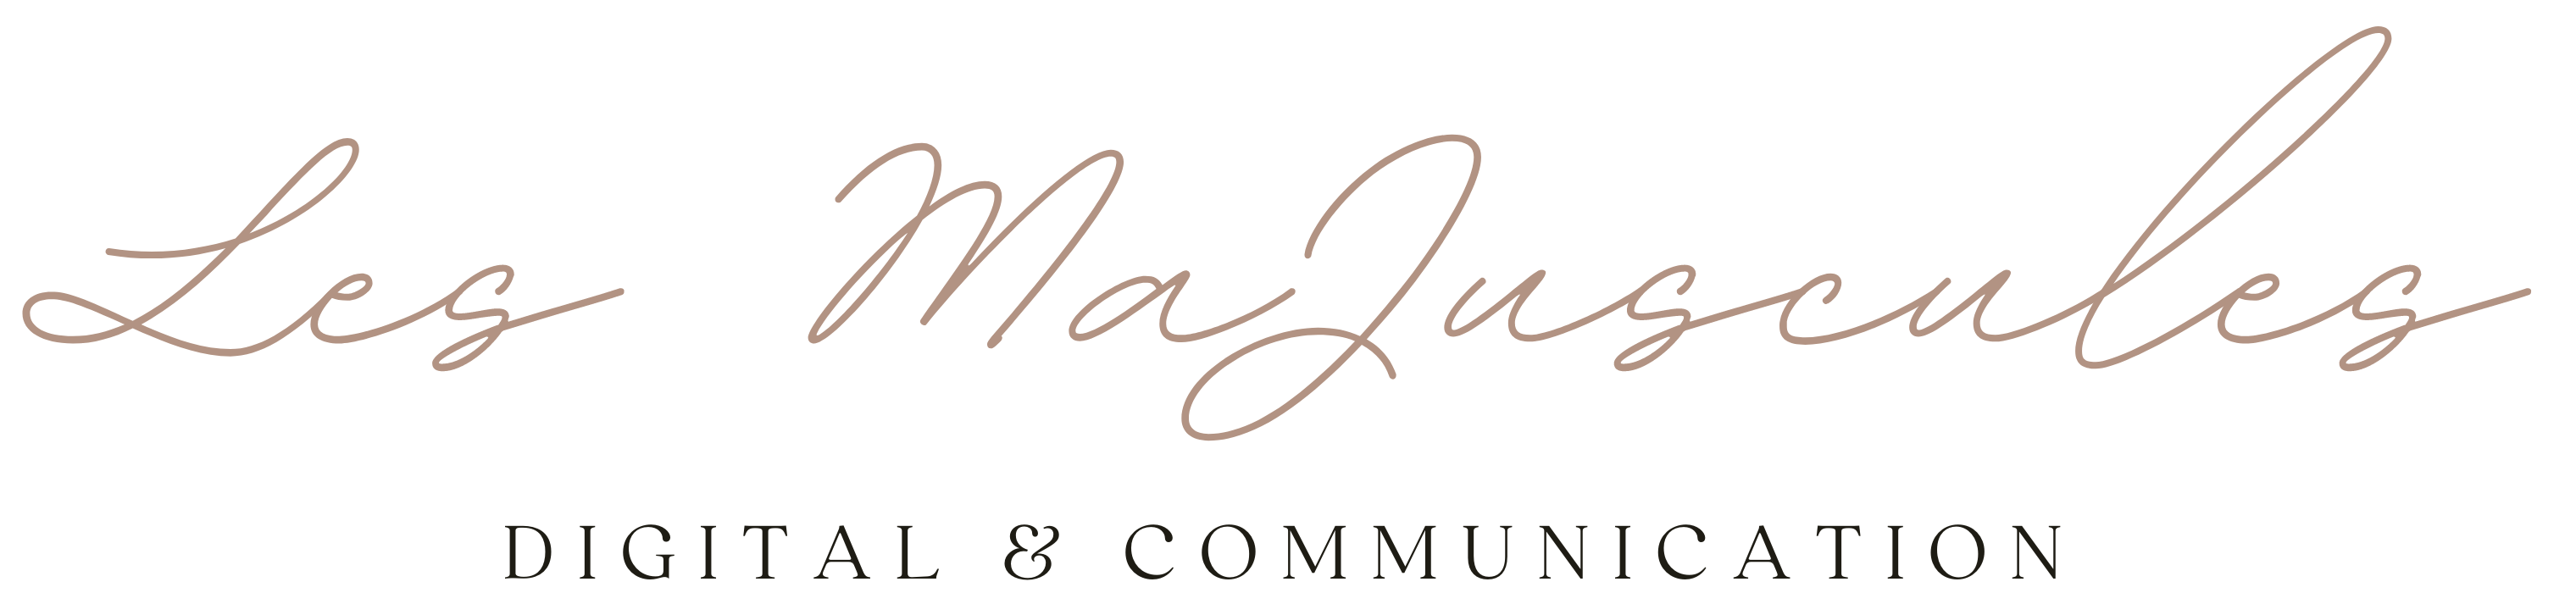 Les MaJuscules - Digital & Communication - Logo